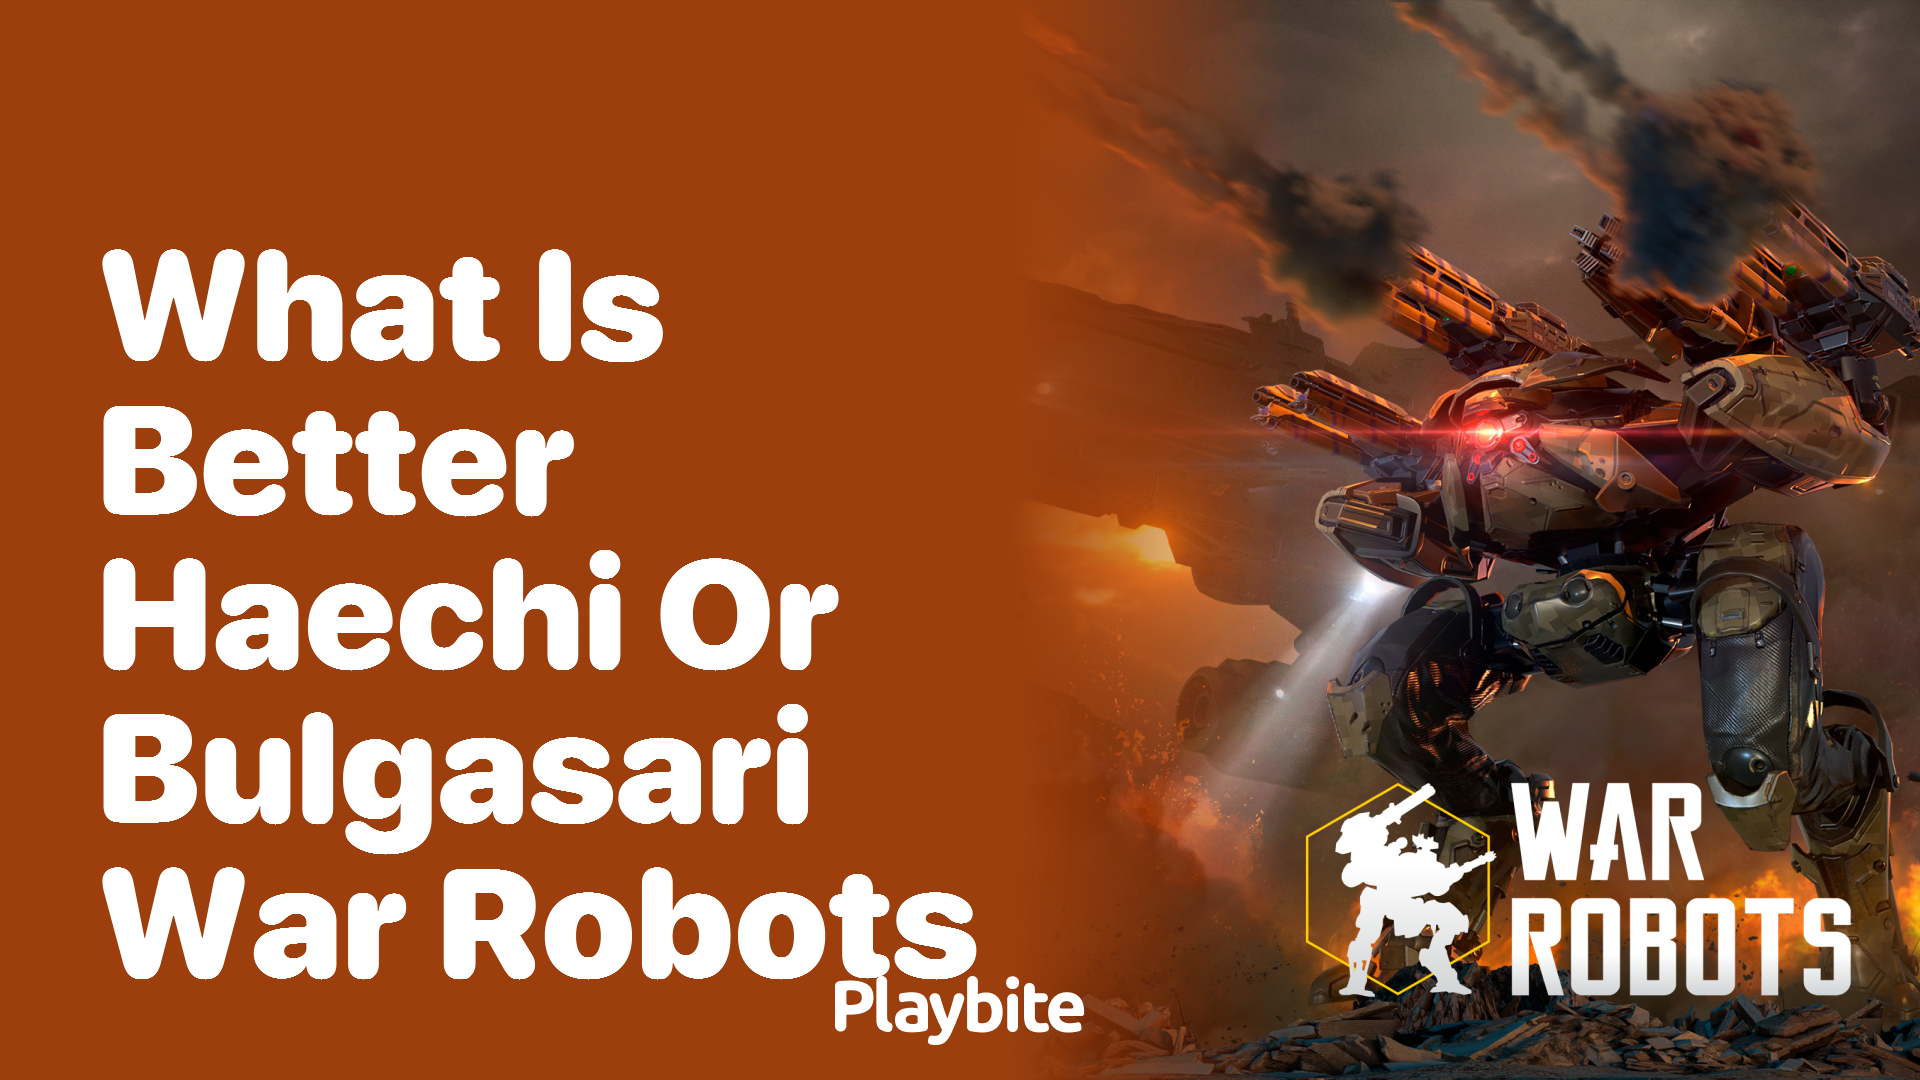 What Is Better in War Robots: Haechi or Bulgasari?